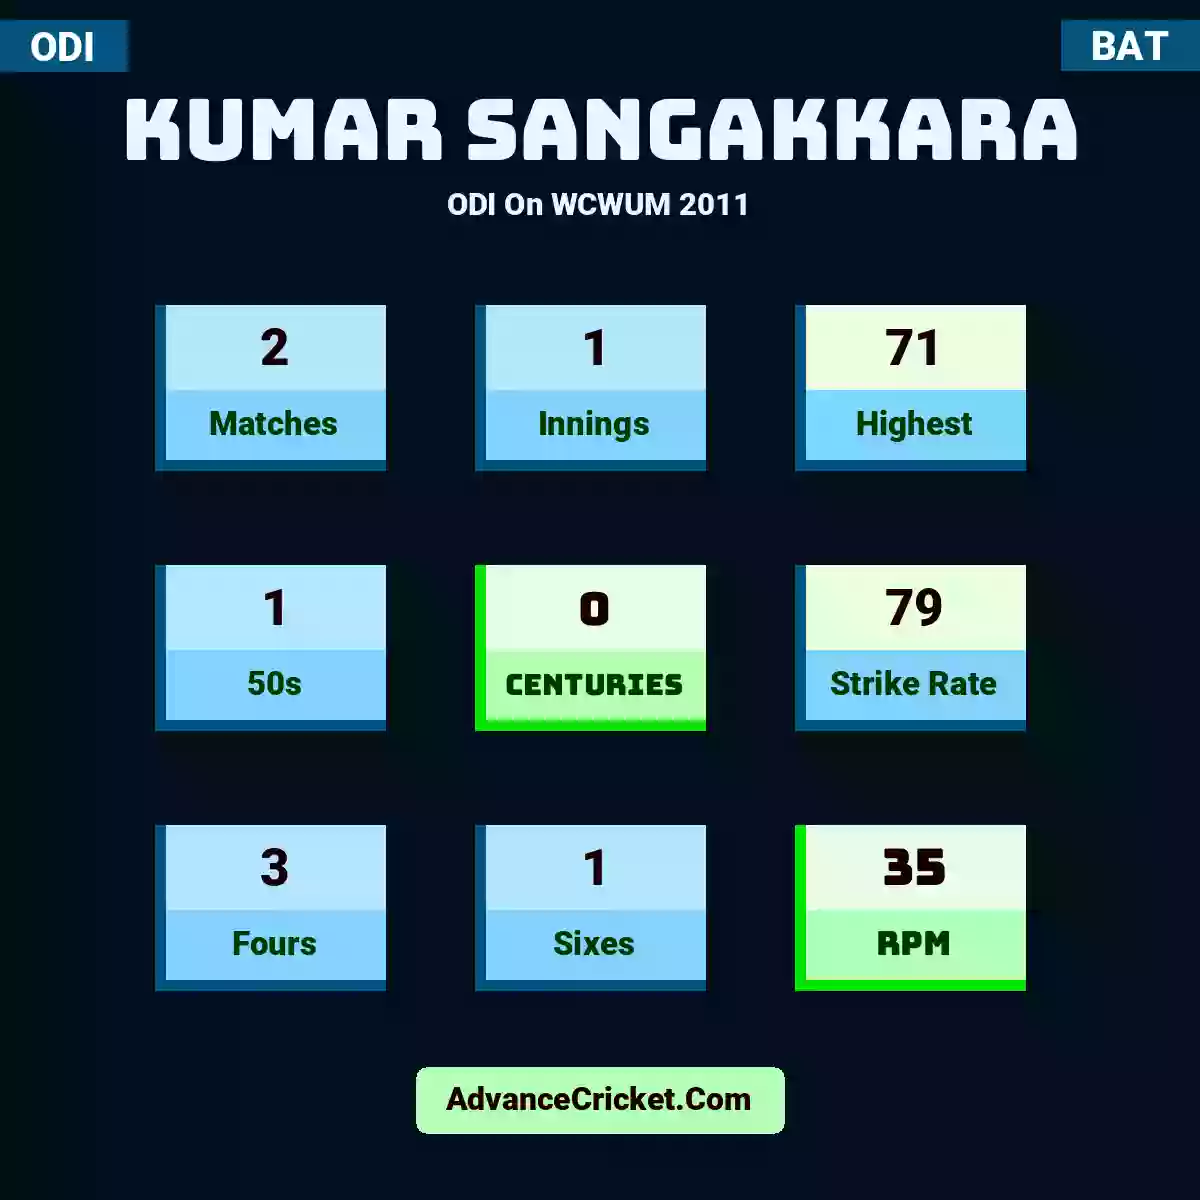 Kumar Sangakkara ODI  On WCWUM 2011, Kumar Sangakkara played 2 matches, scored 71 runs as highest, 1 half-centuries, and 0 centuries, with a strike rate of 79. K.Sangakkara hit 3 fours and 1 sixes, with an RPM of 35.